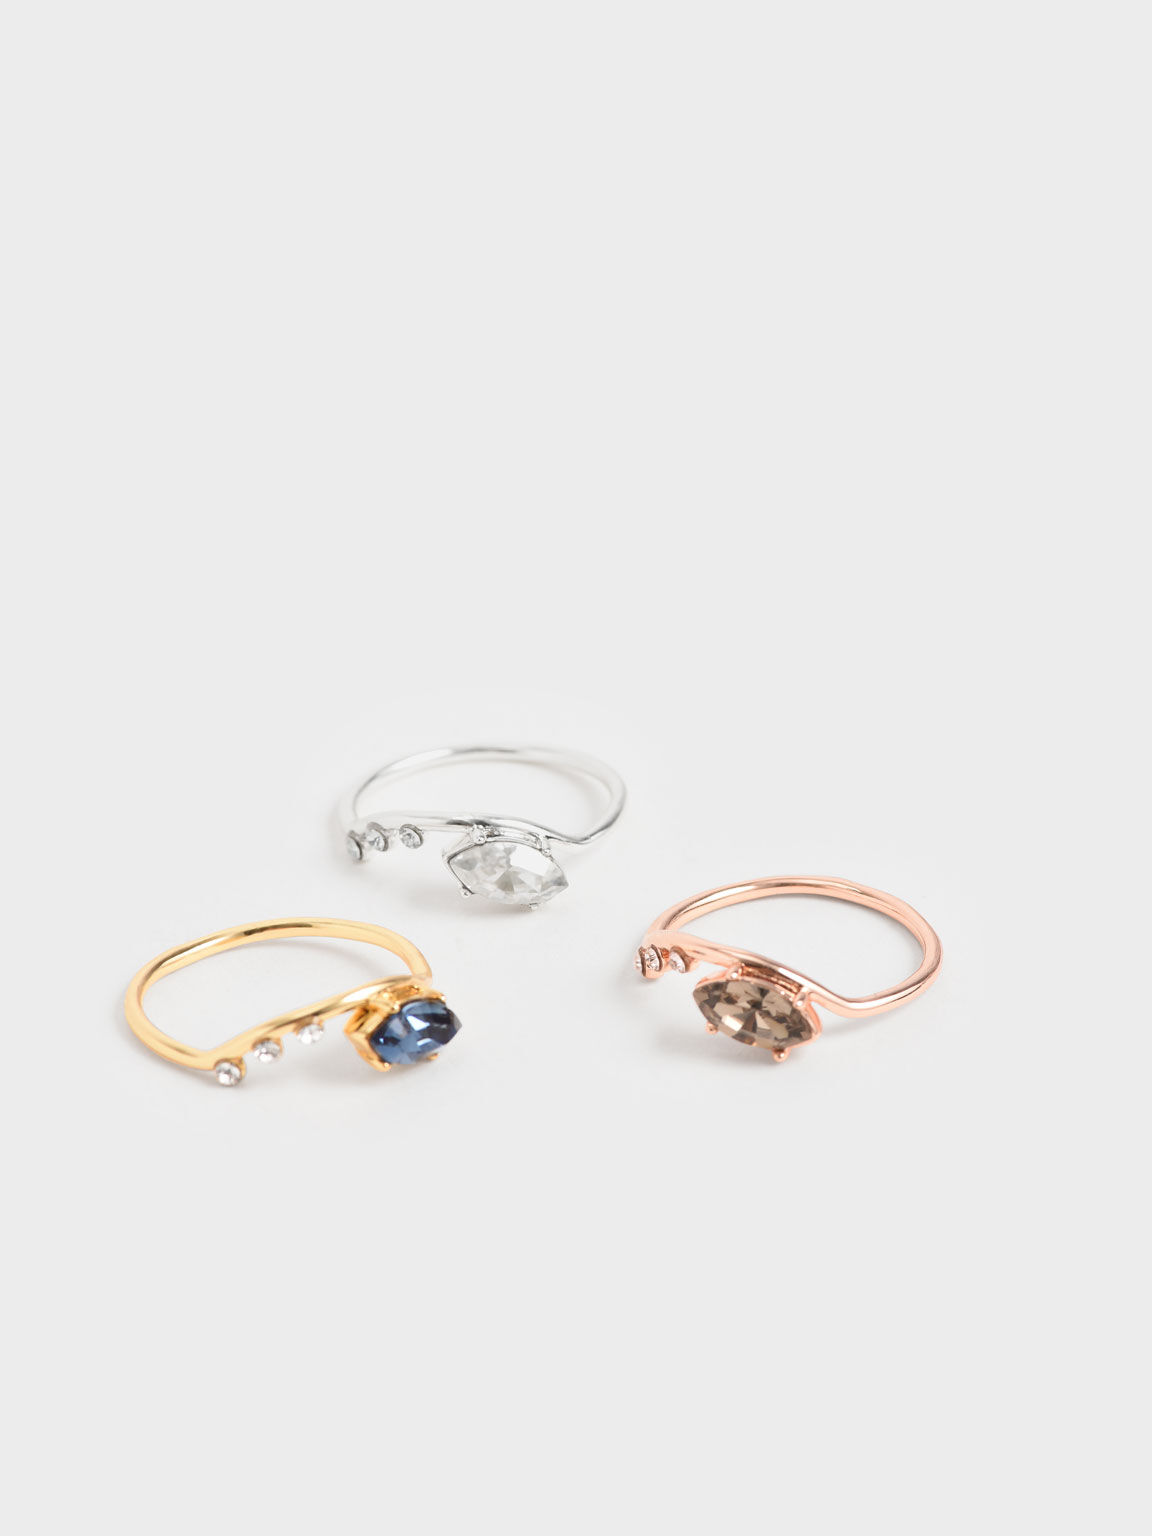 Swarovski™ Crystals Necklace - Light Rose – Shelby's Toe Rings